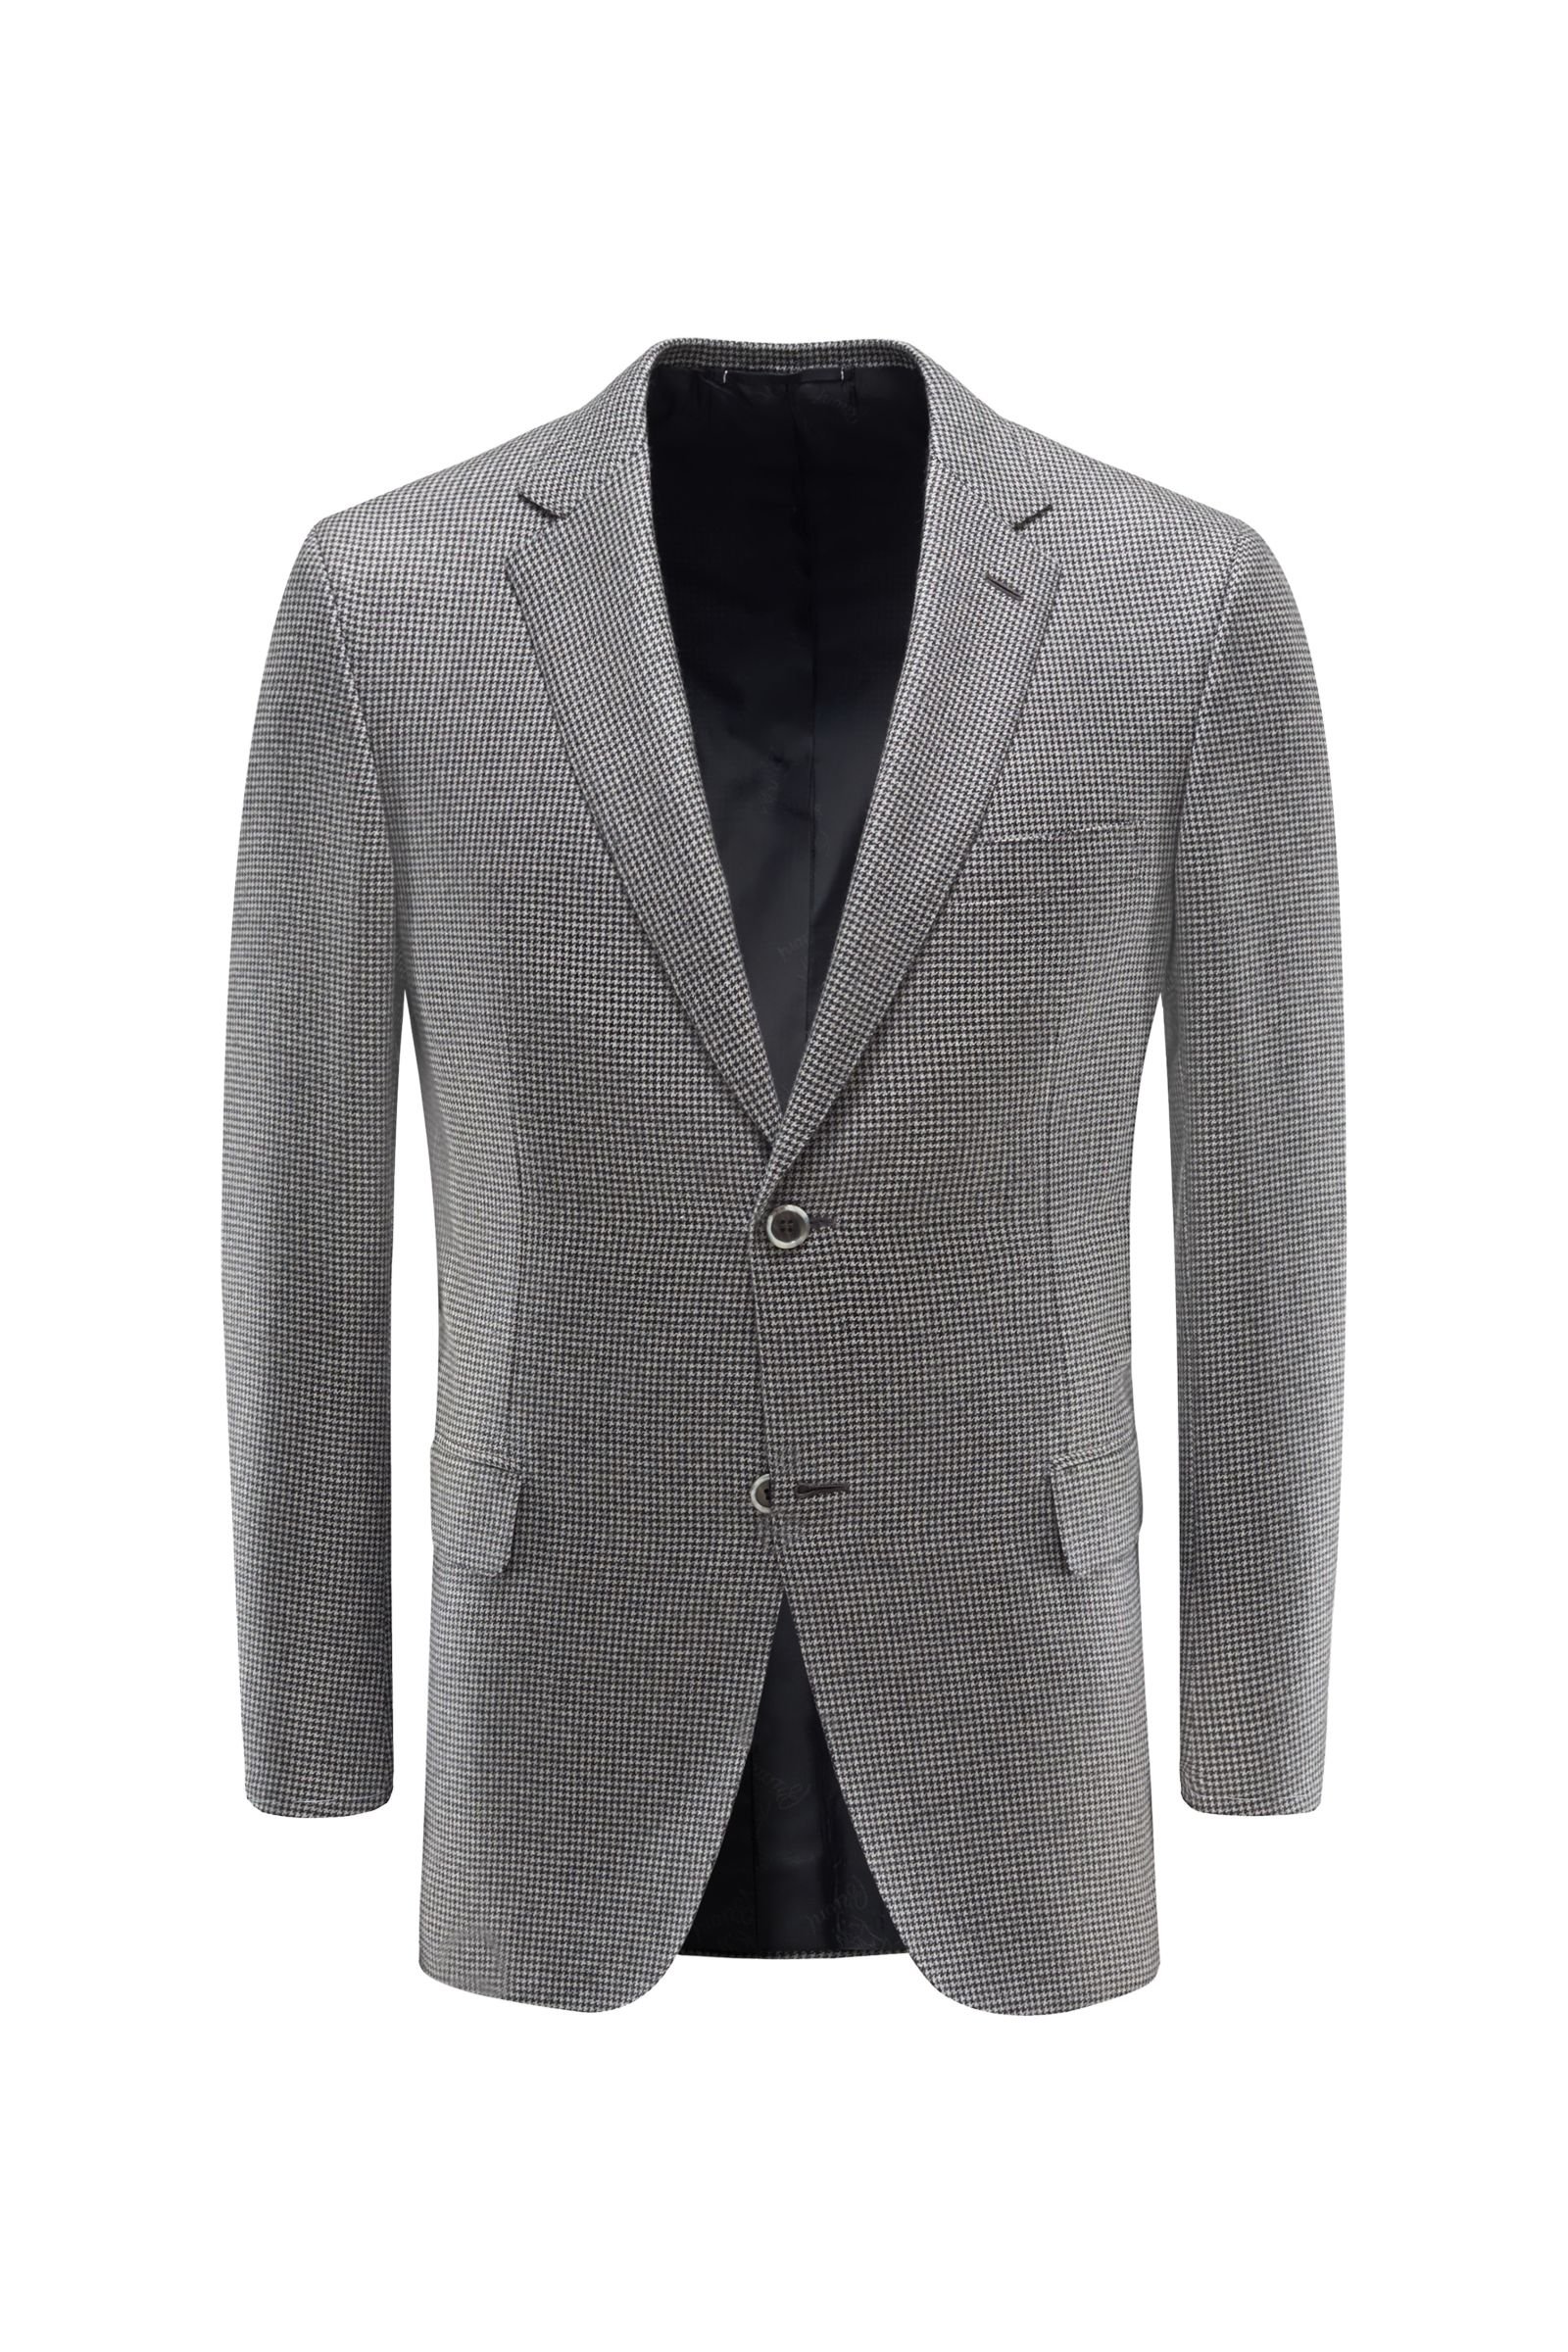 Cashmere smart-casual jacket ‘Ravello’ black/white checked